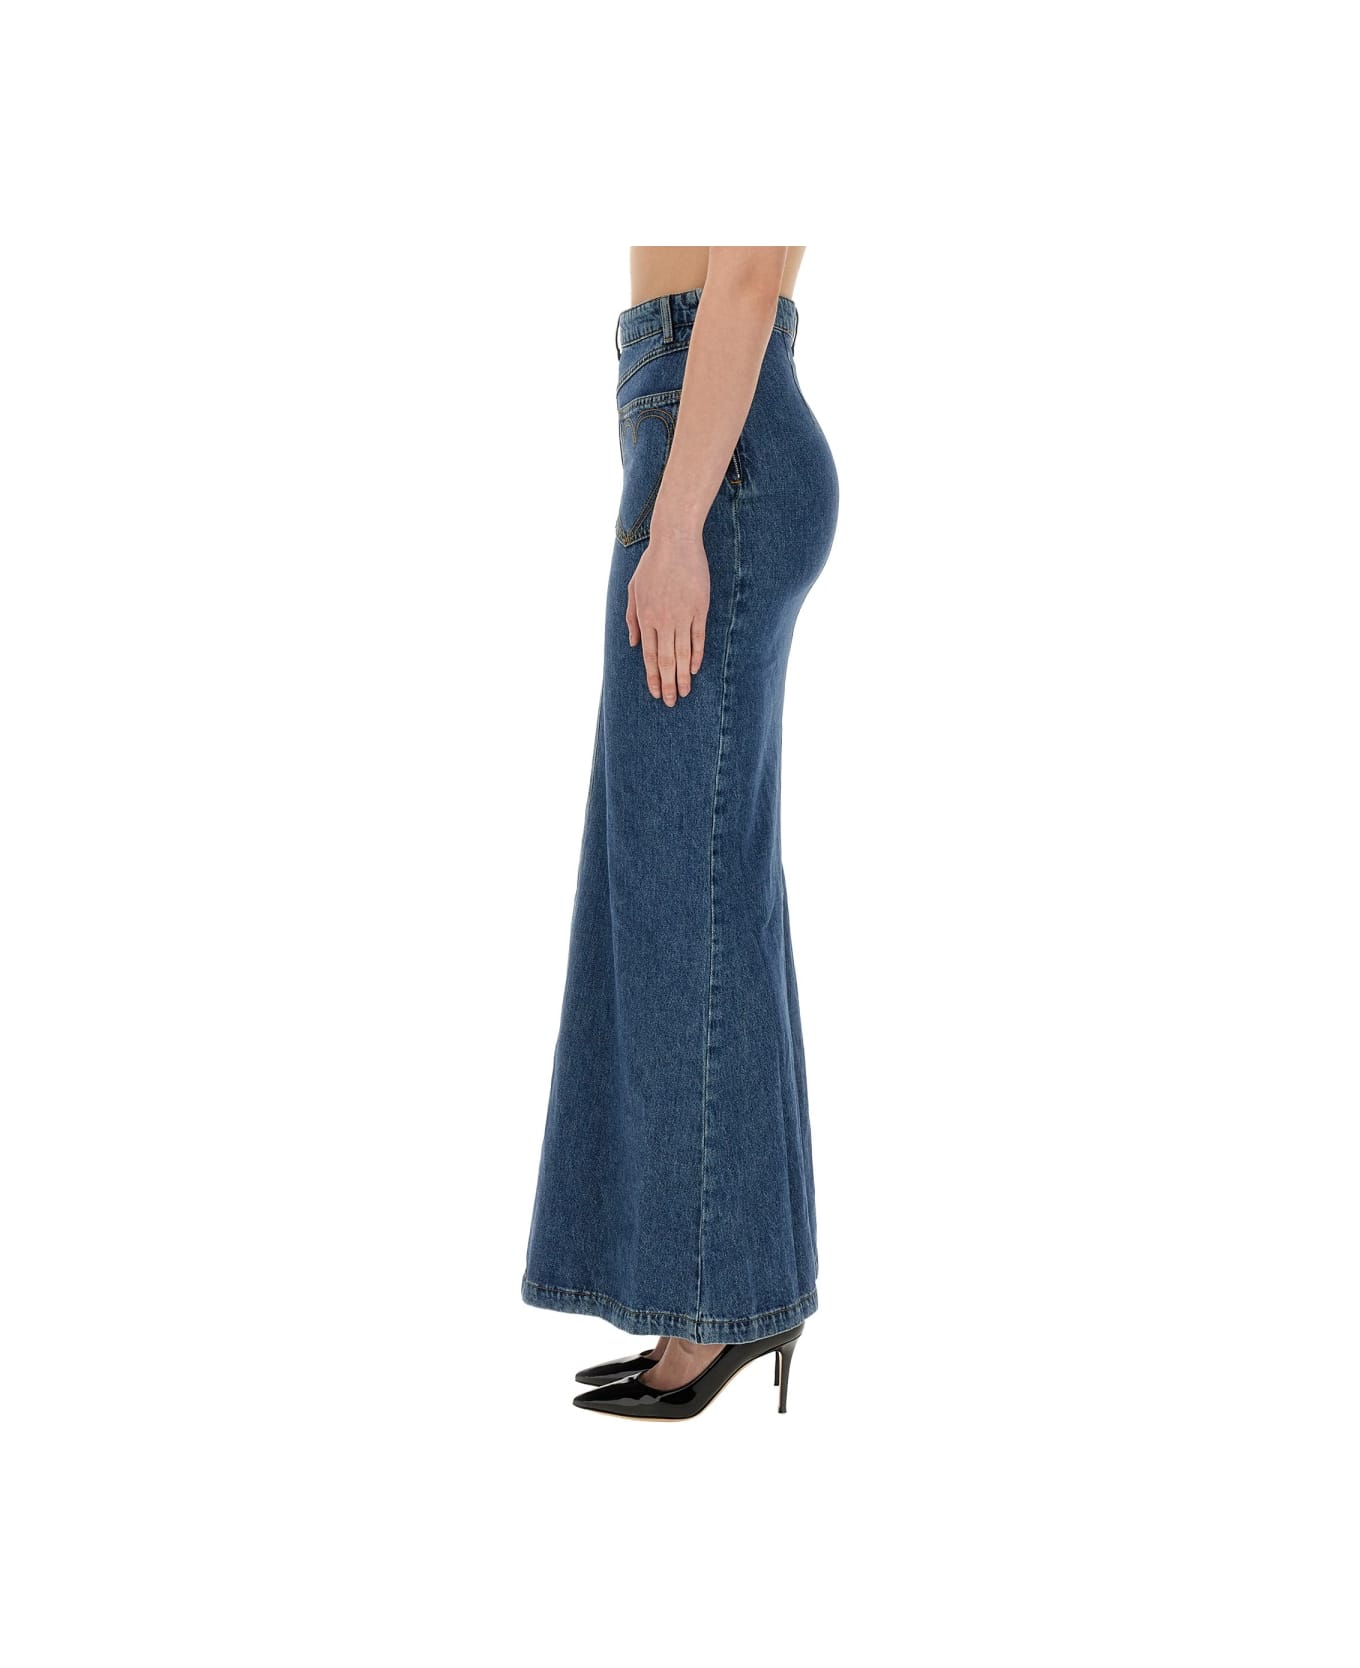 M05CH1N0 Jeans Long Skirt - BLUE